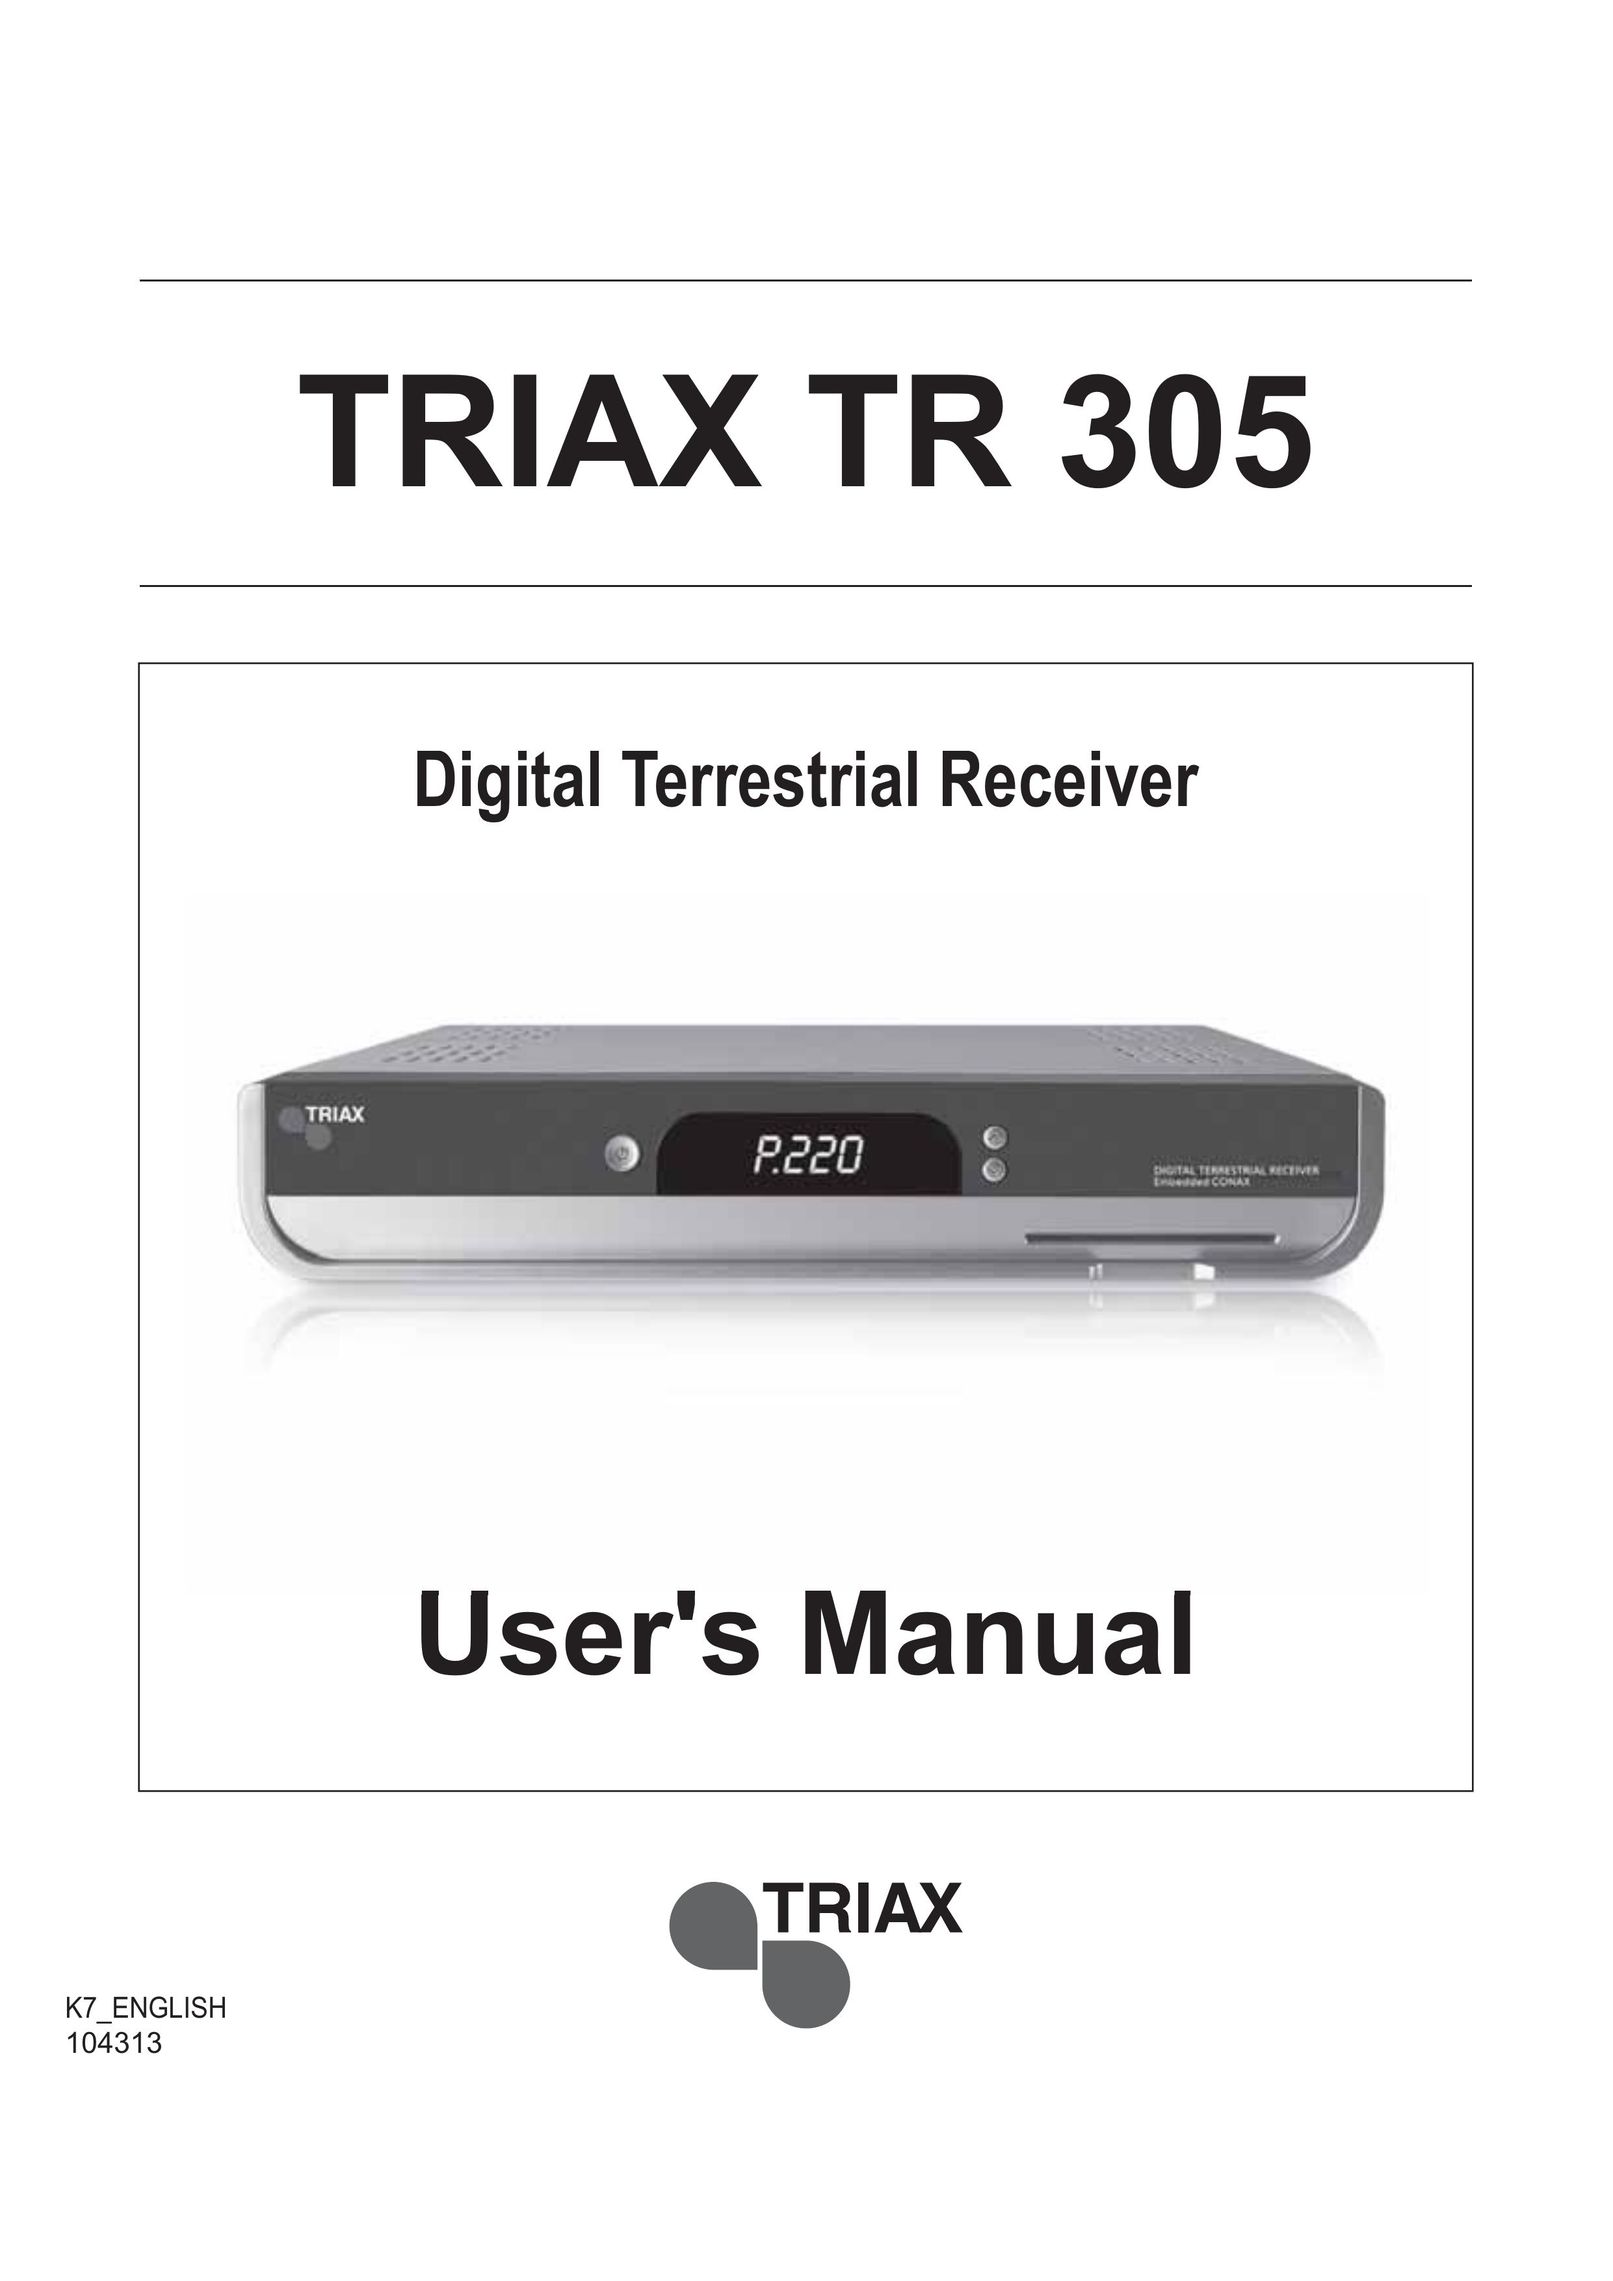 Triax TR 305 DVD Player User Manual